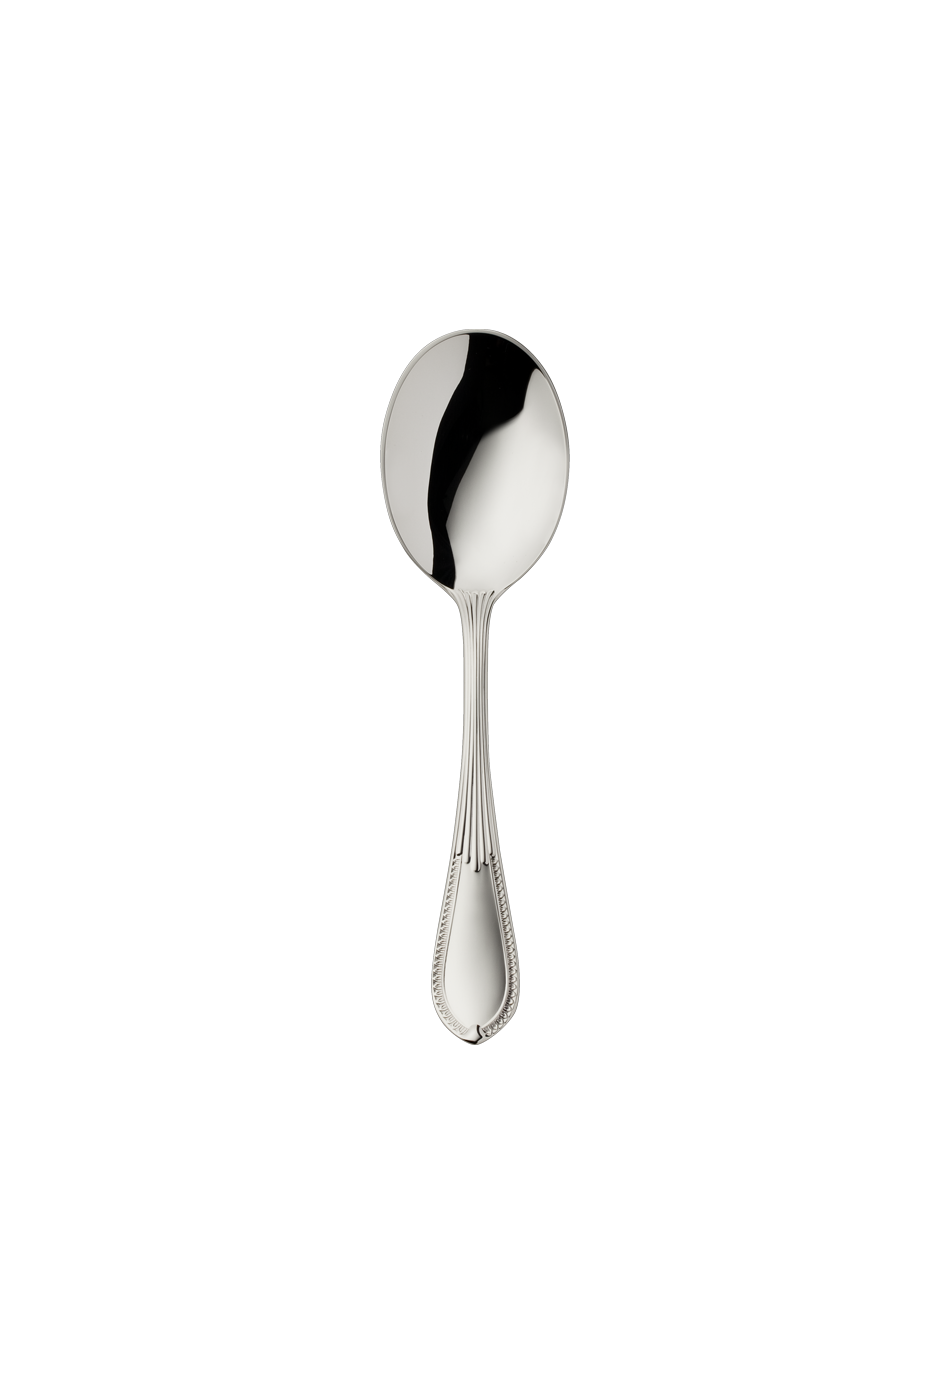 Belvedere Cream Spoon (Broth Spoon) (150g massive silverplated)